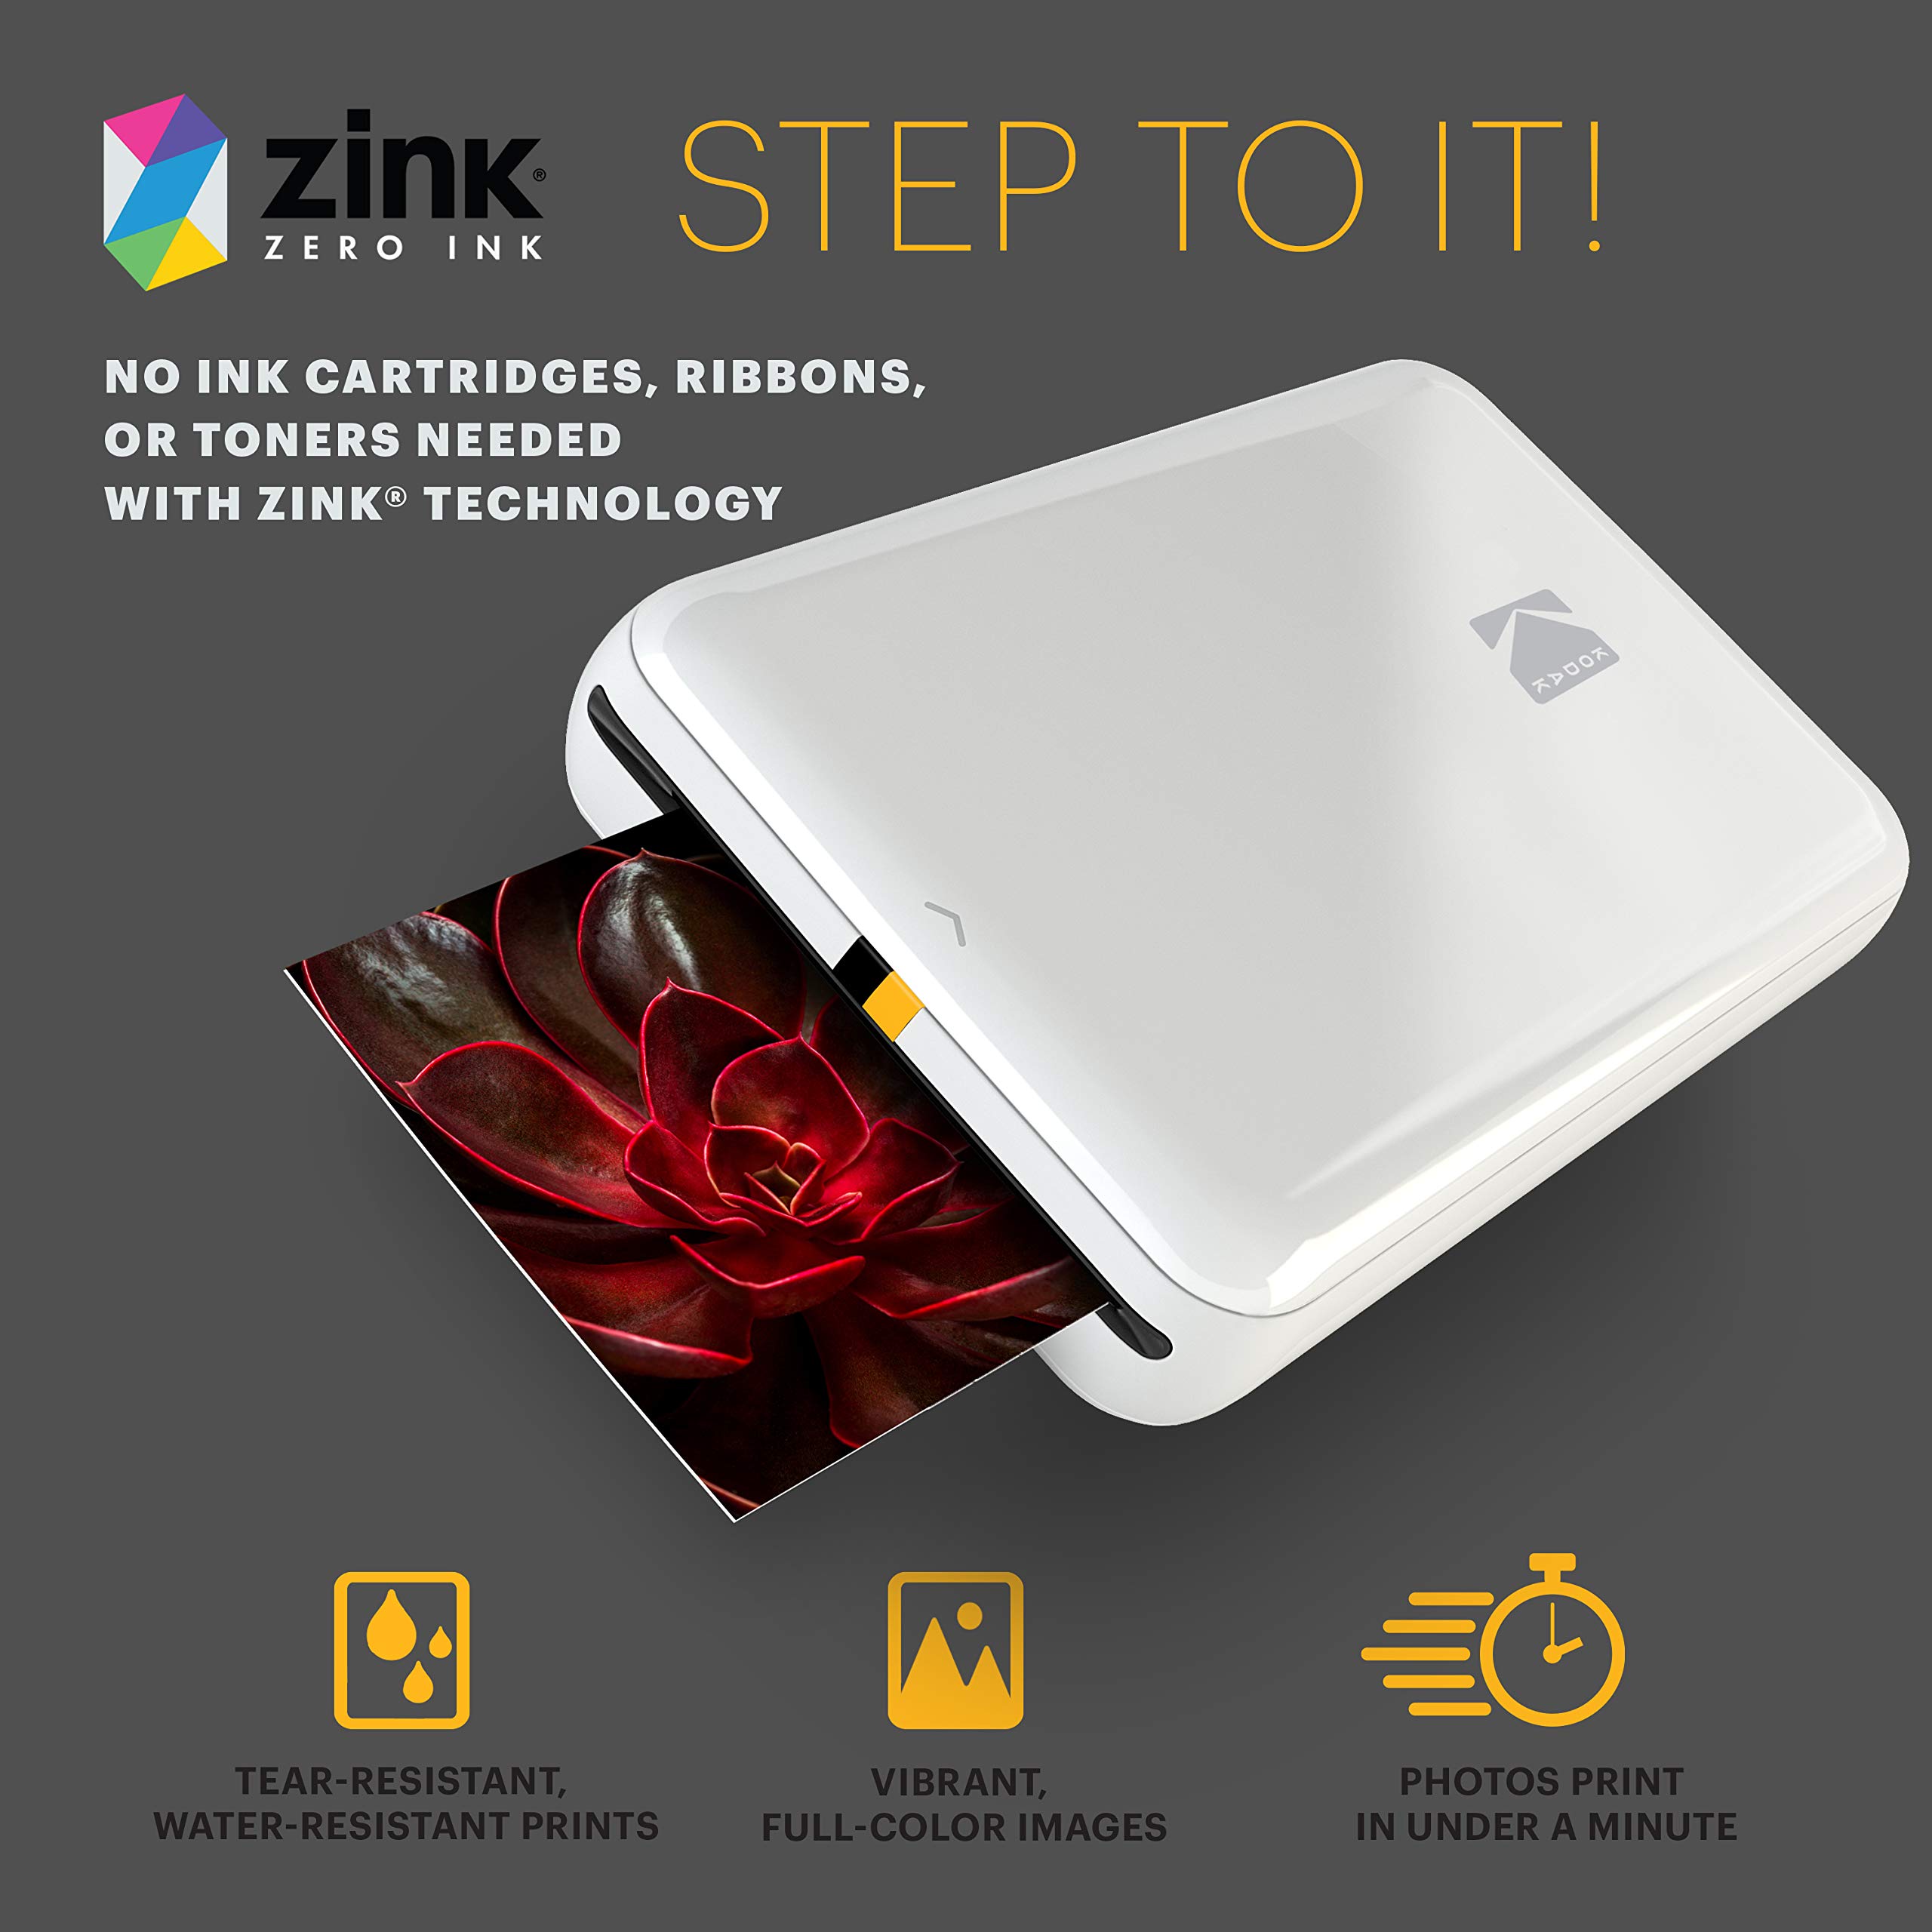 KODAK Step Wireless Mobile Photo Mini Color Printer (White) Compatible w/ iOS & Android, NFC & Bluetooth Devices, 2x3